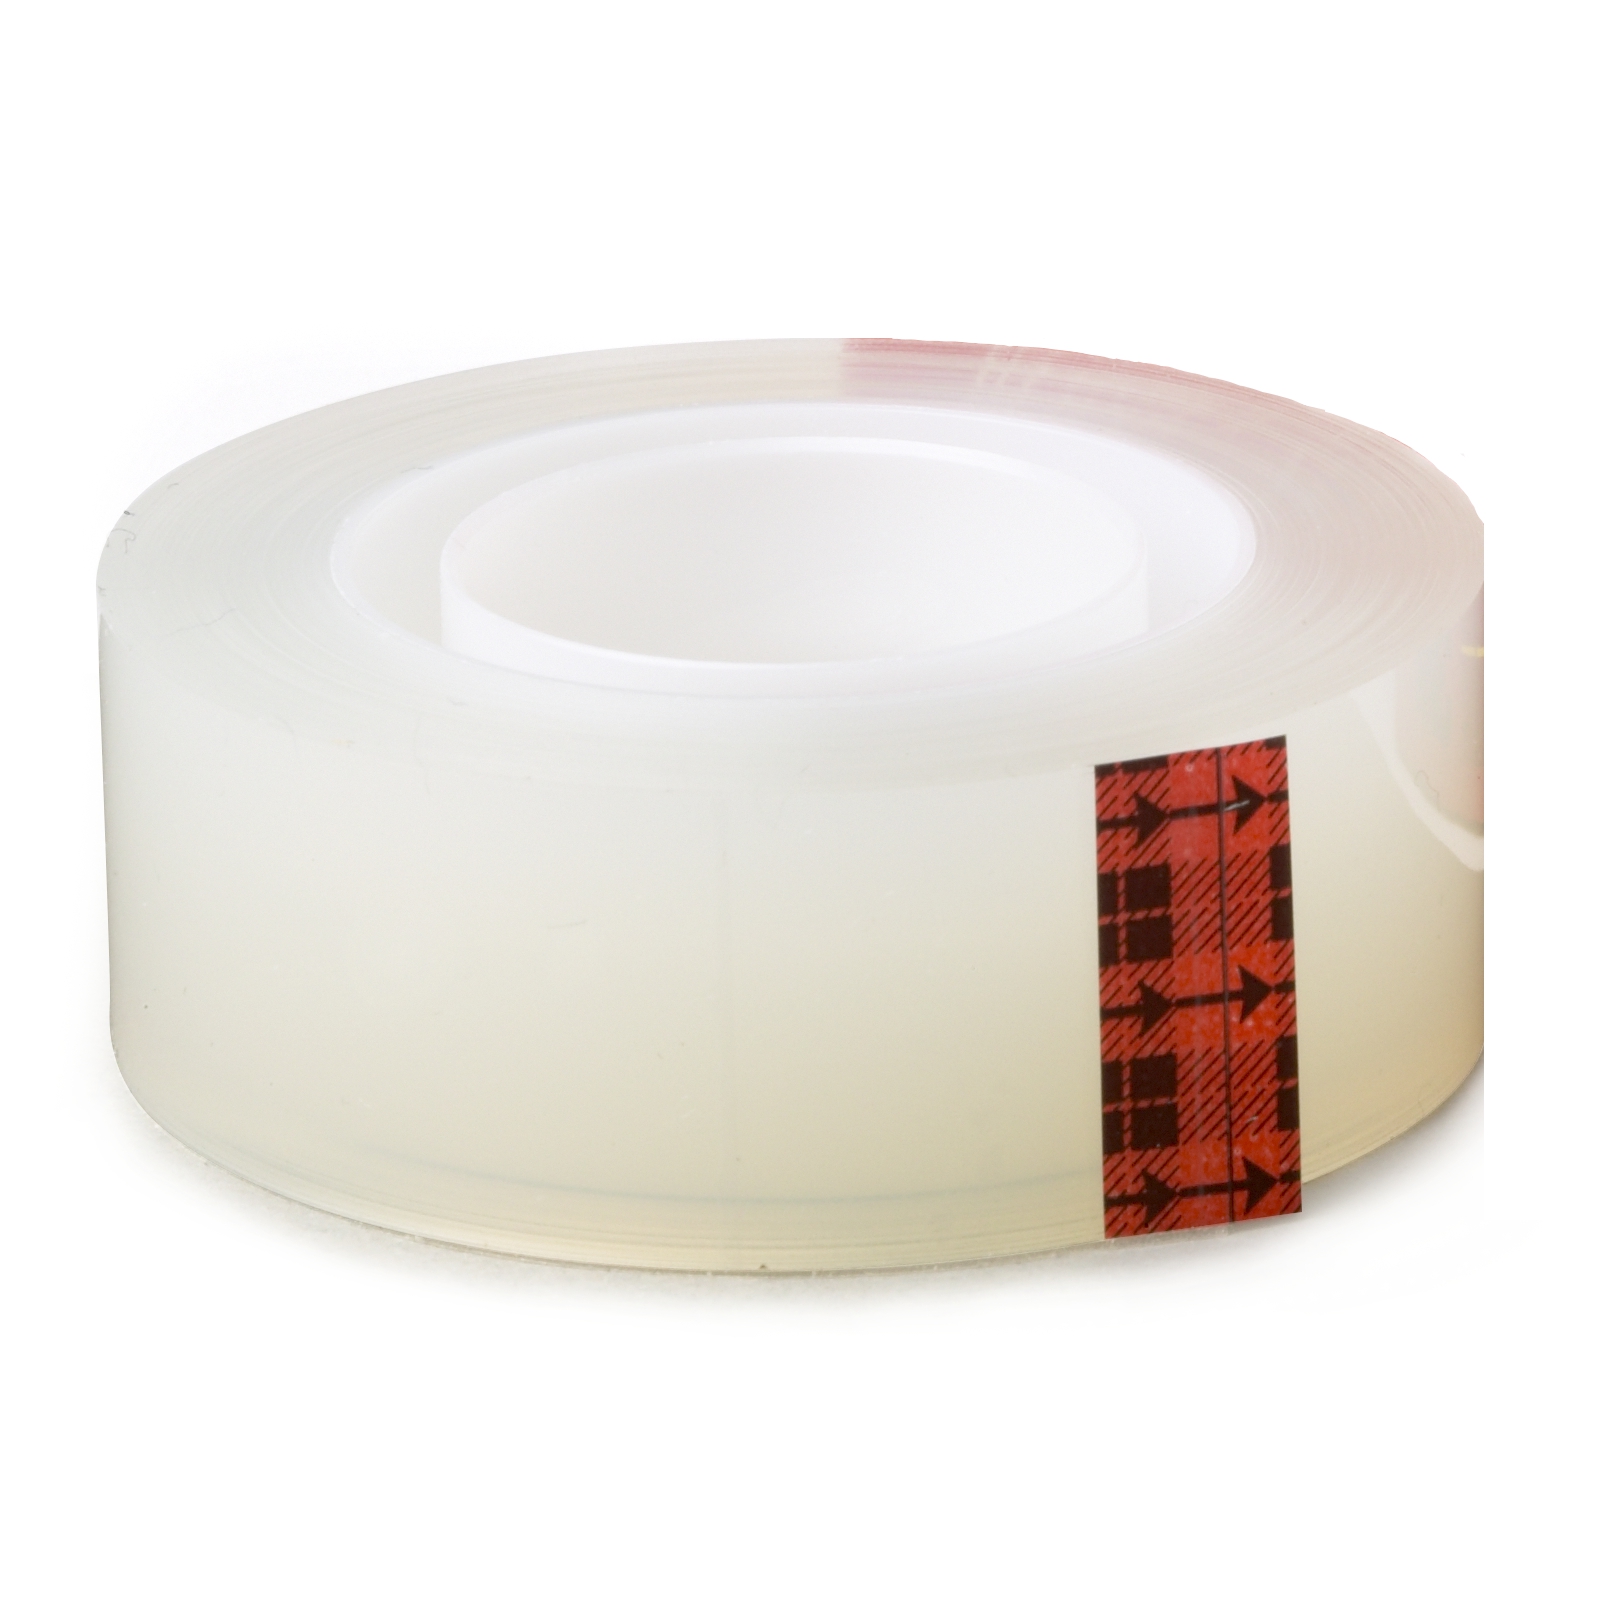 Scotch Light-Duty Packaging Tape - High Clarity, 1 x 72yds, 3 Core, Transparent